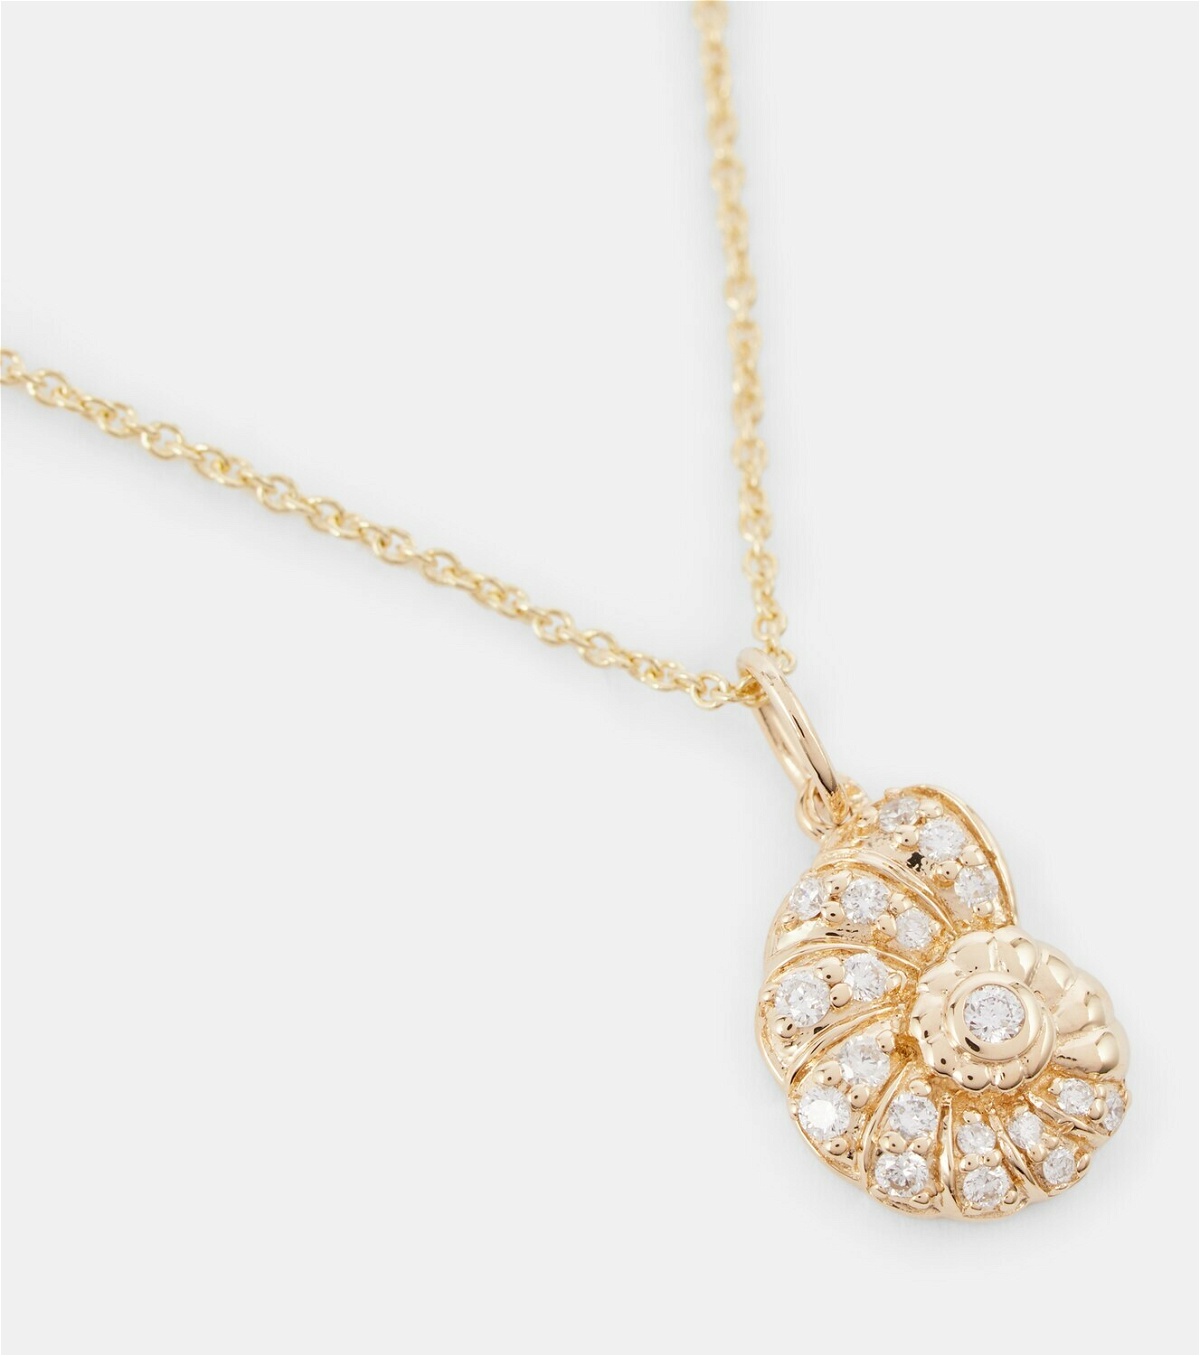 Sydney Evan Nautilus Shell 14kt gold pendant necklace with diamonds